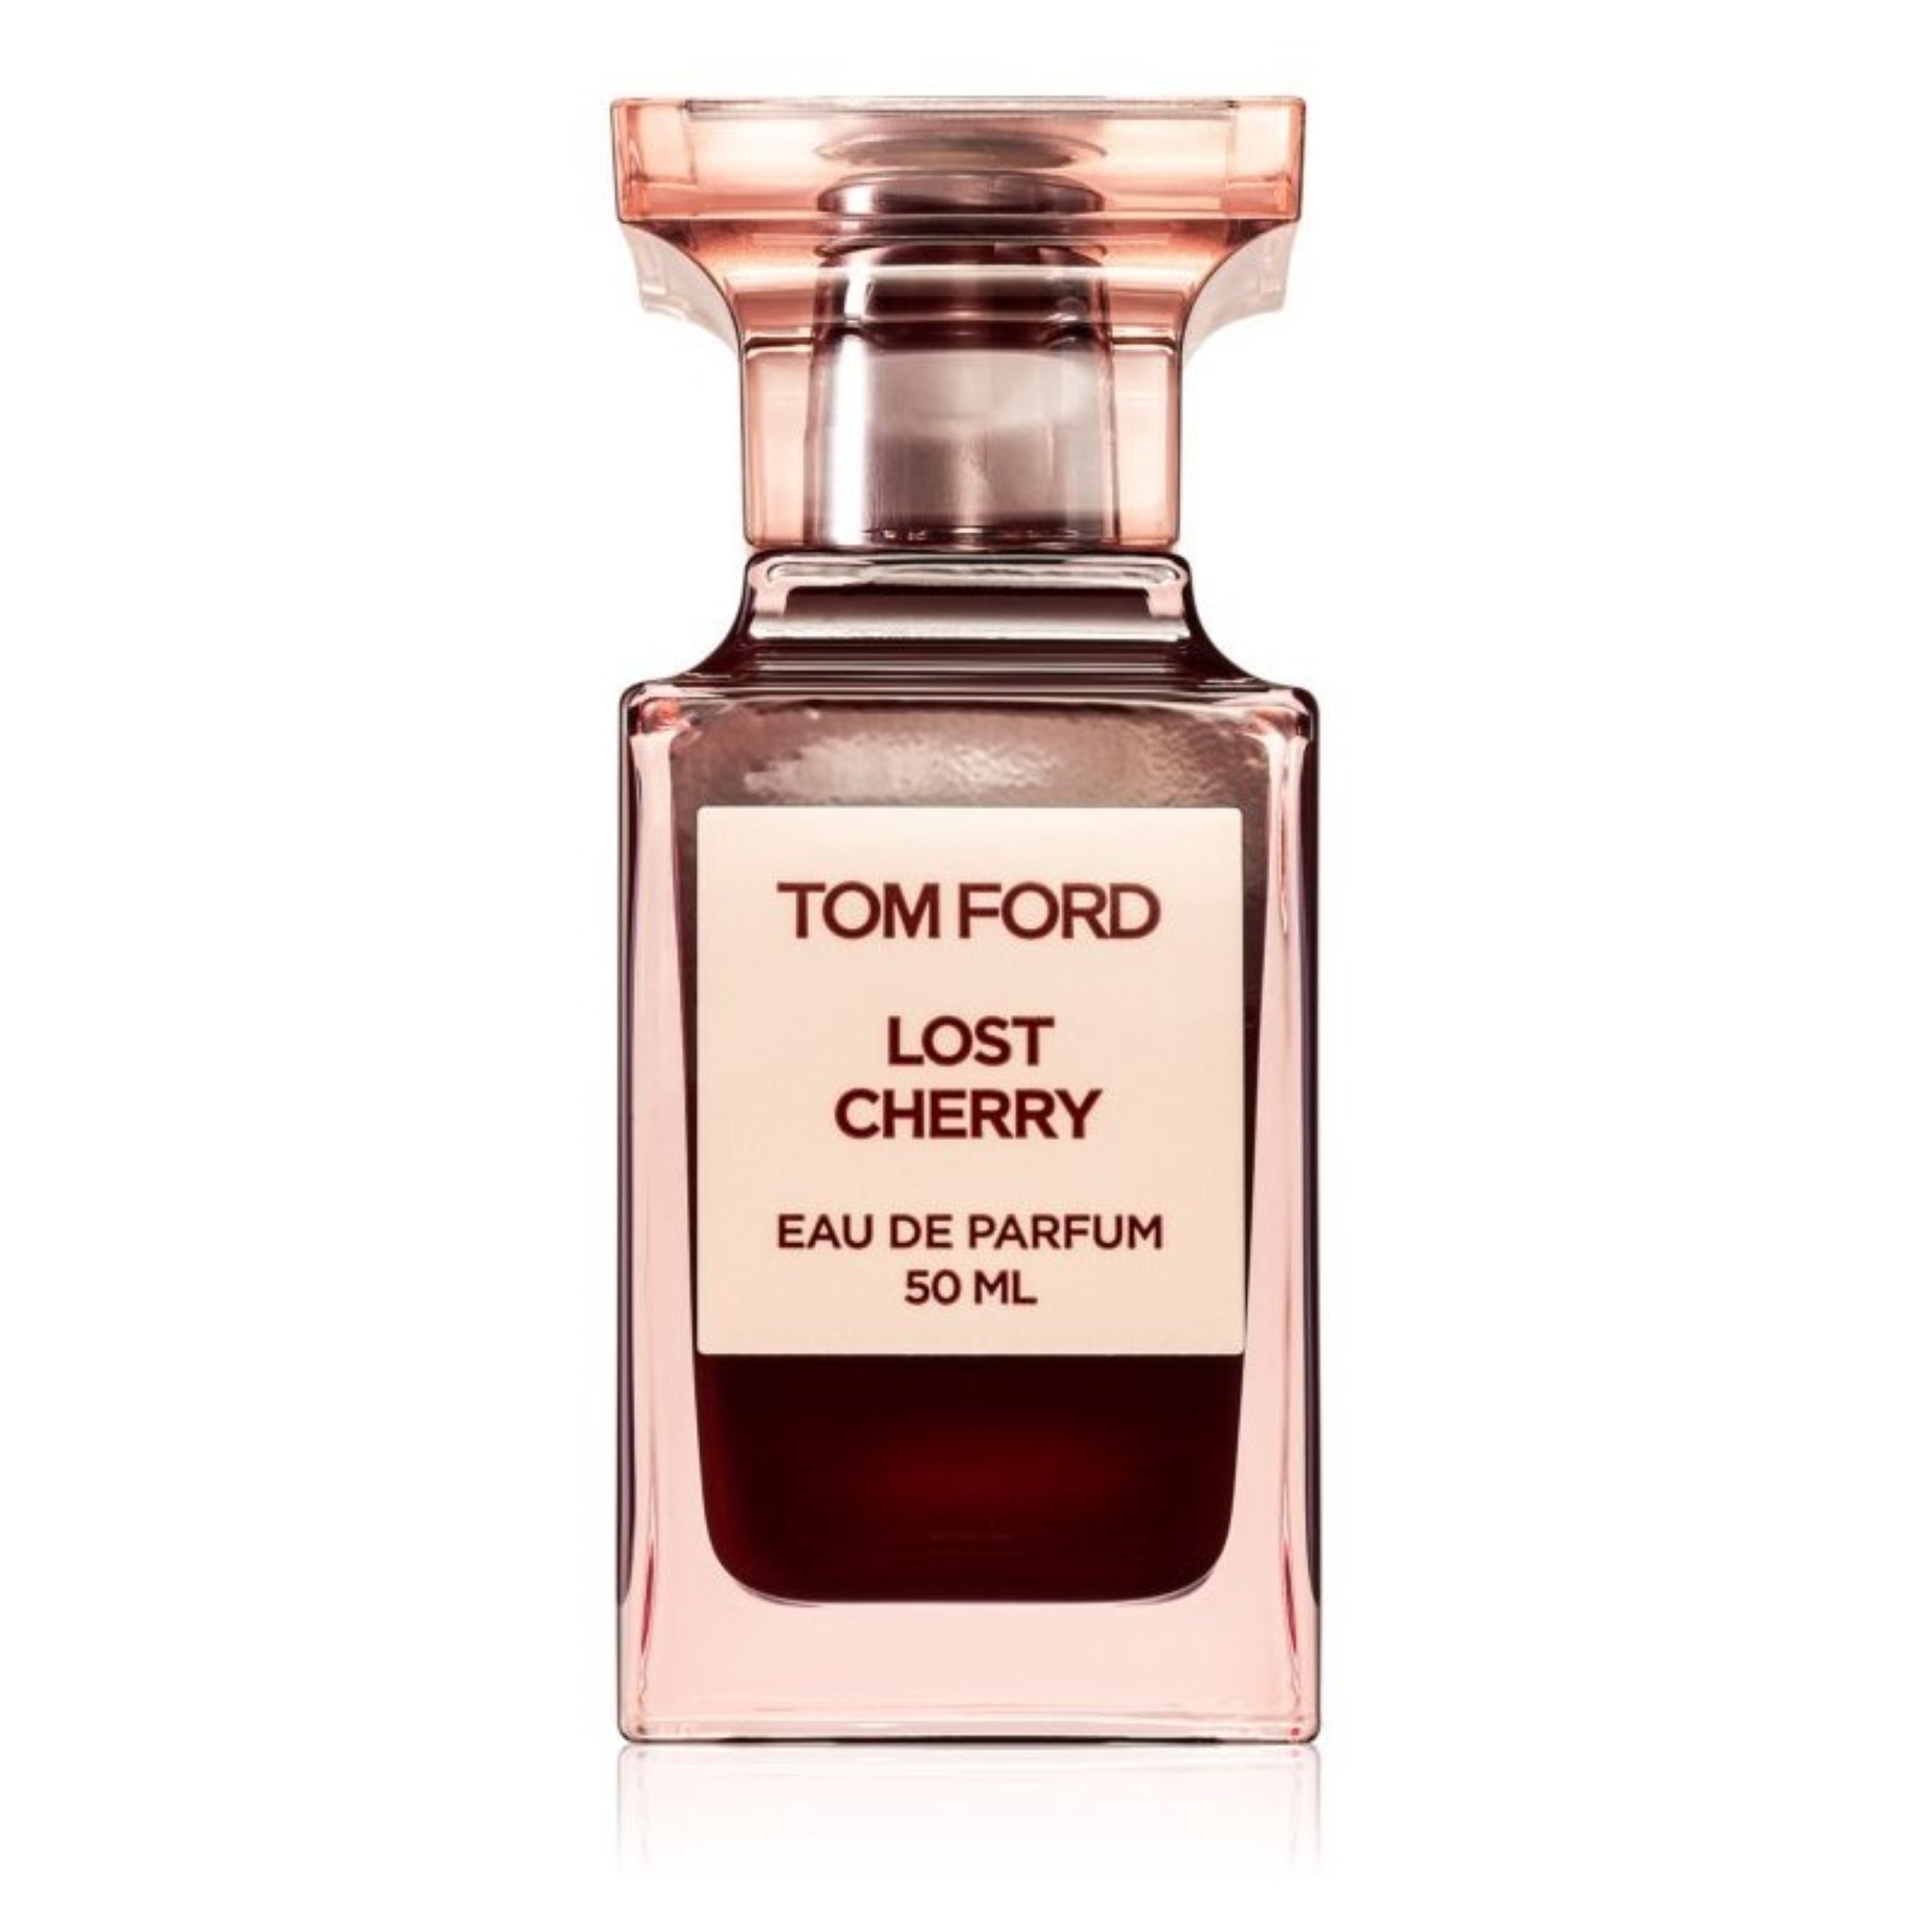 Tom ford lost cherry 50. Том Форд лост черри 50 мл. Tom Ford "Lost Cherry Eau de Parfum" 50 ml. Tom Ford Lost Cherry EDP 50 ml.